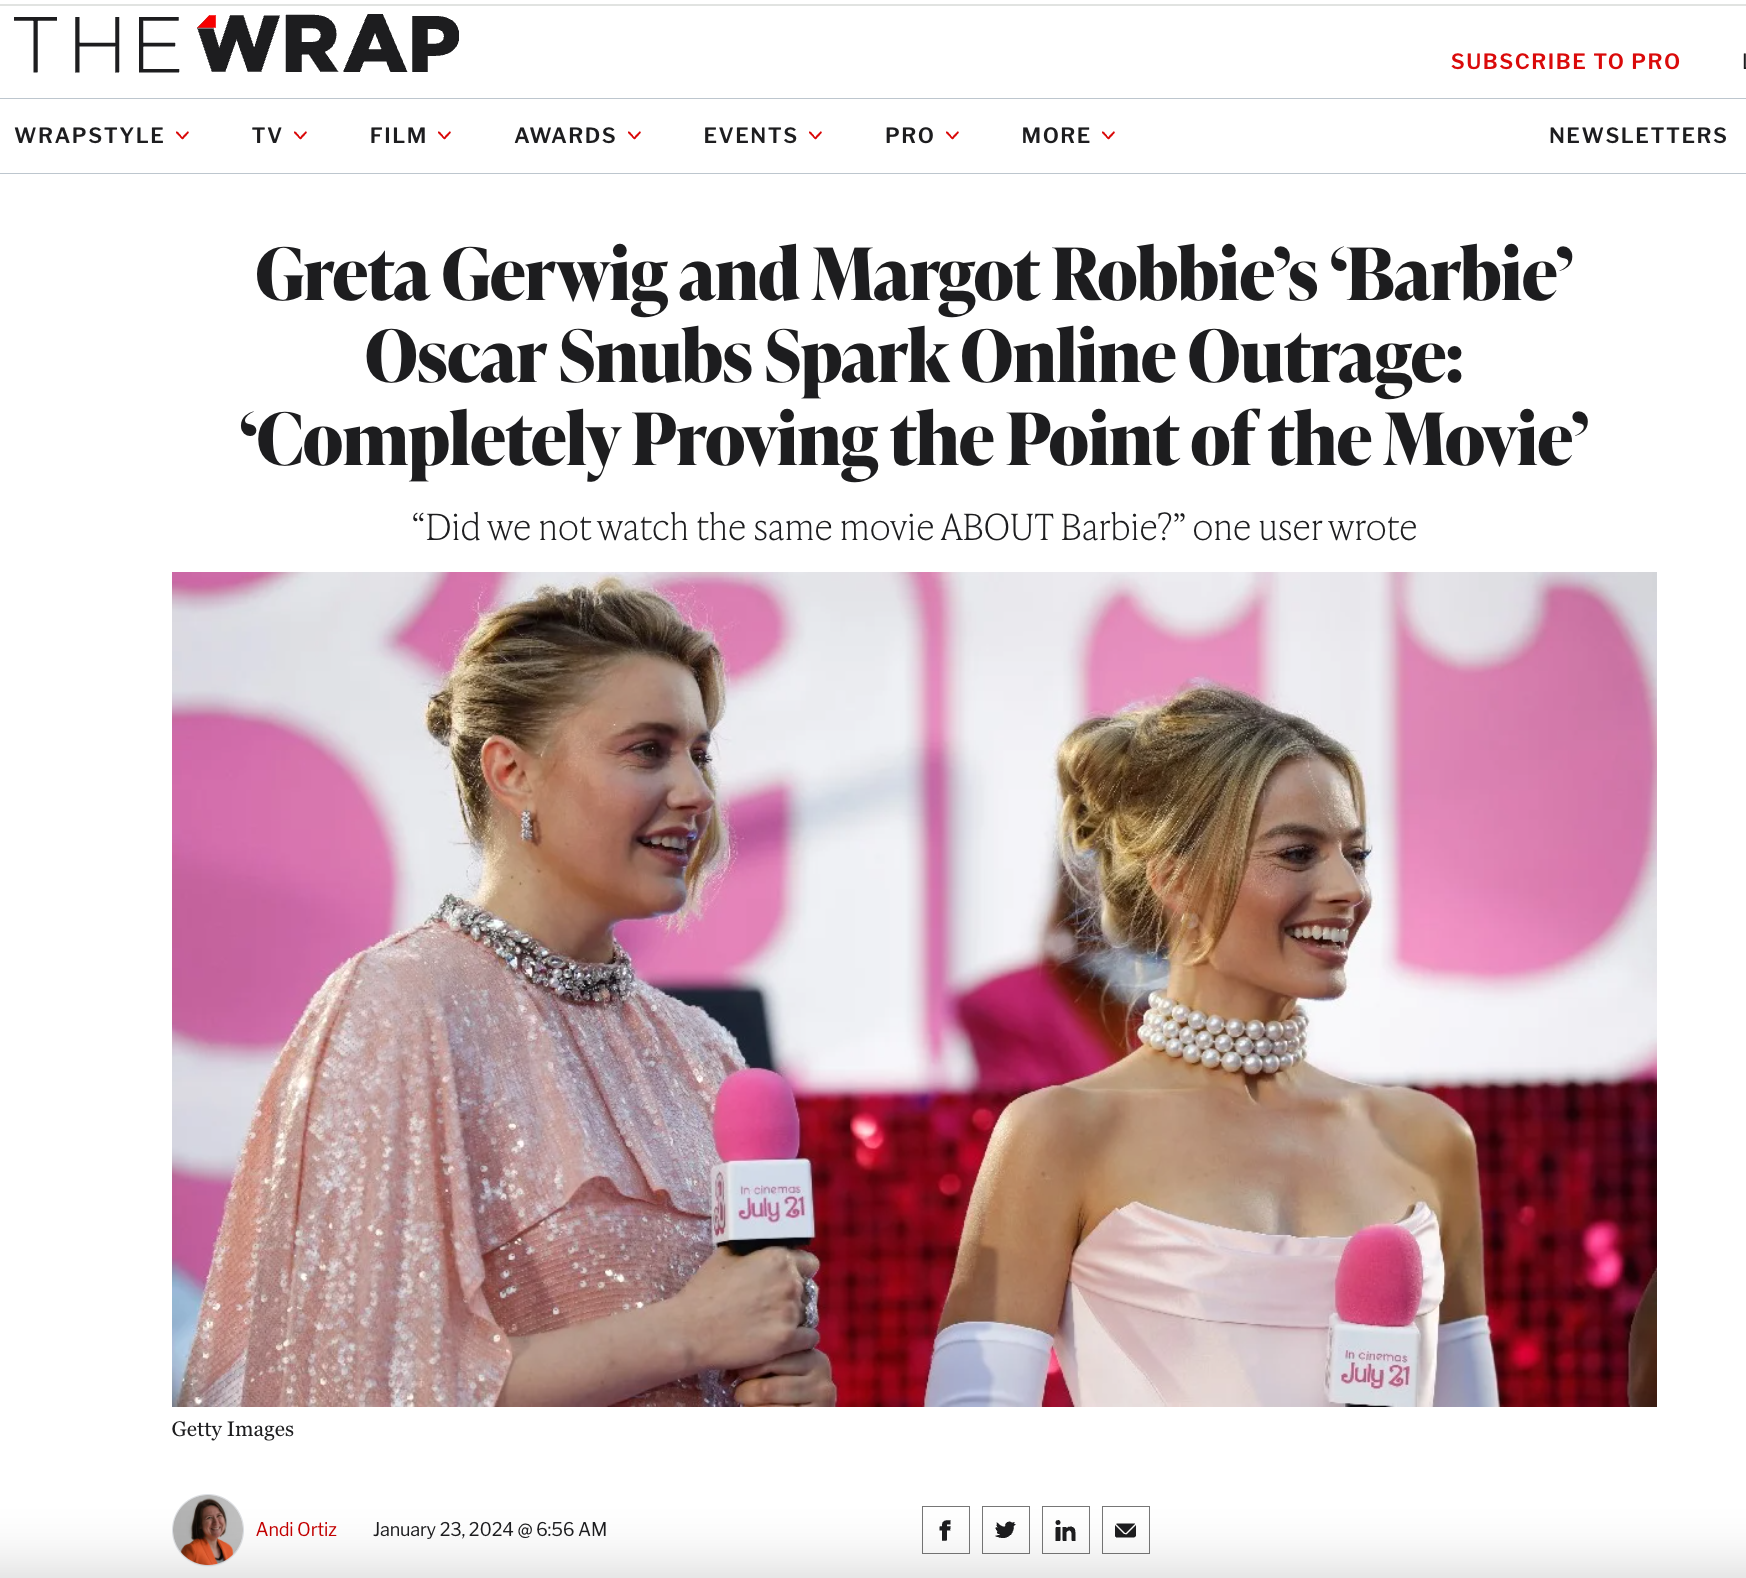 Trade coverage of Greta Gerwig and Margot Robbie’s Oscar “snub”